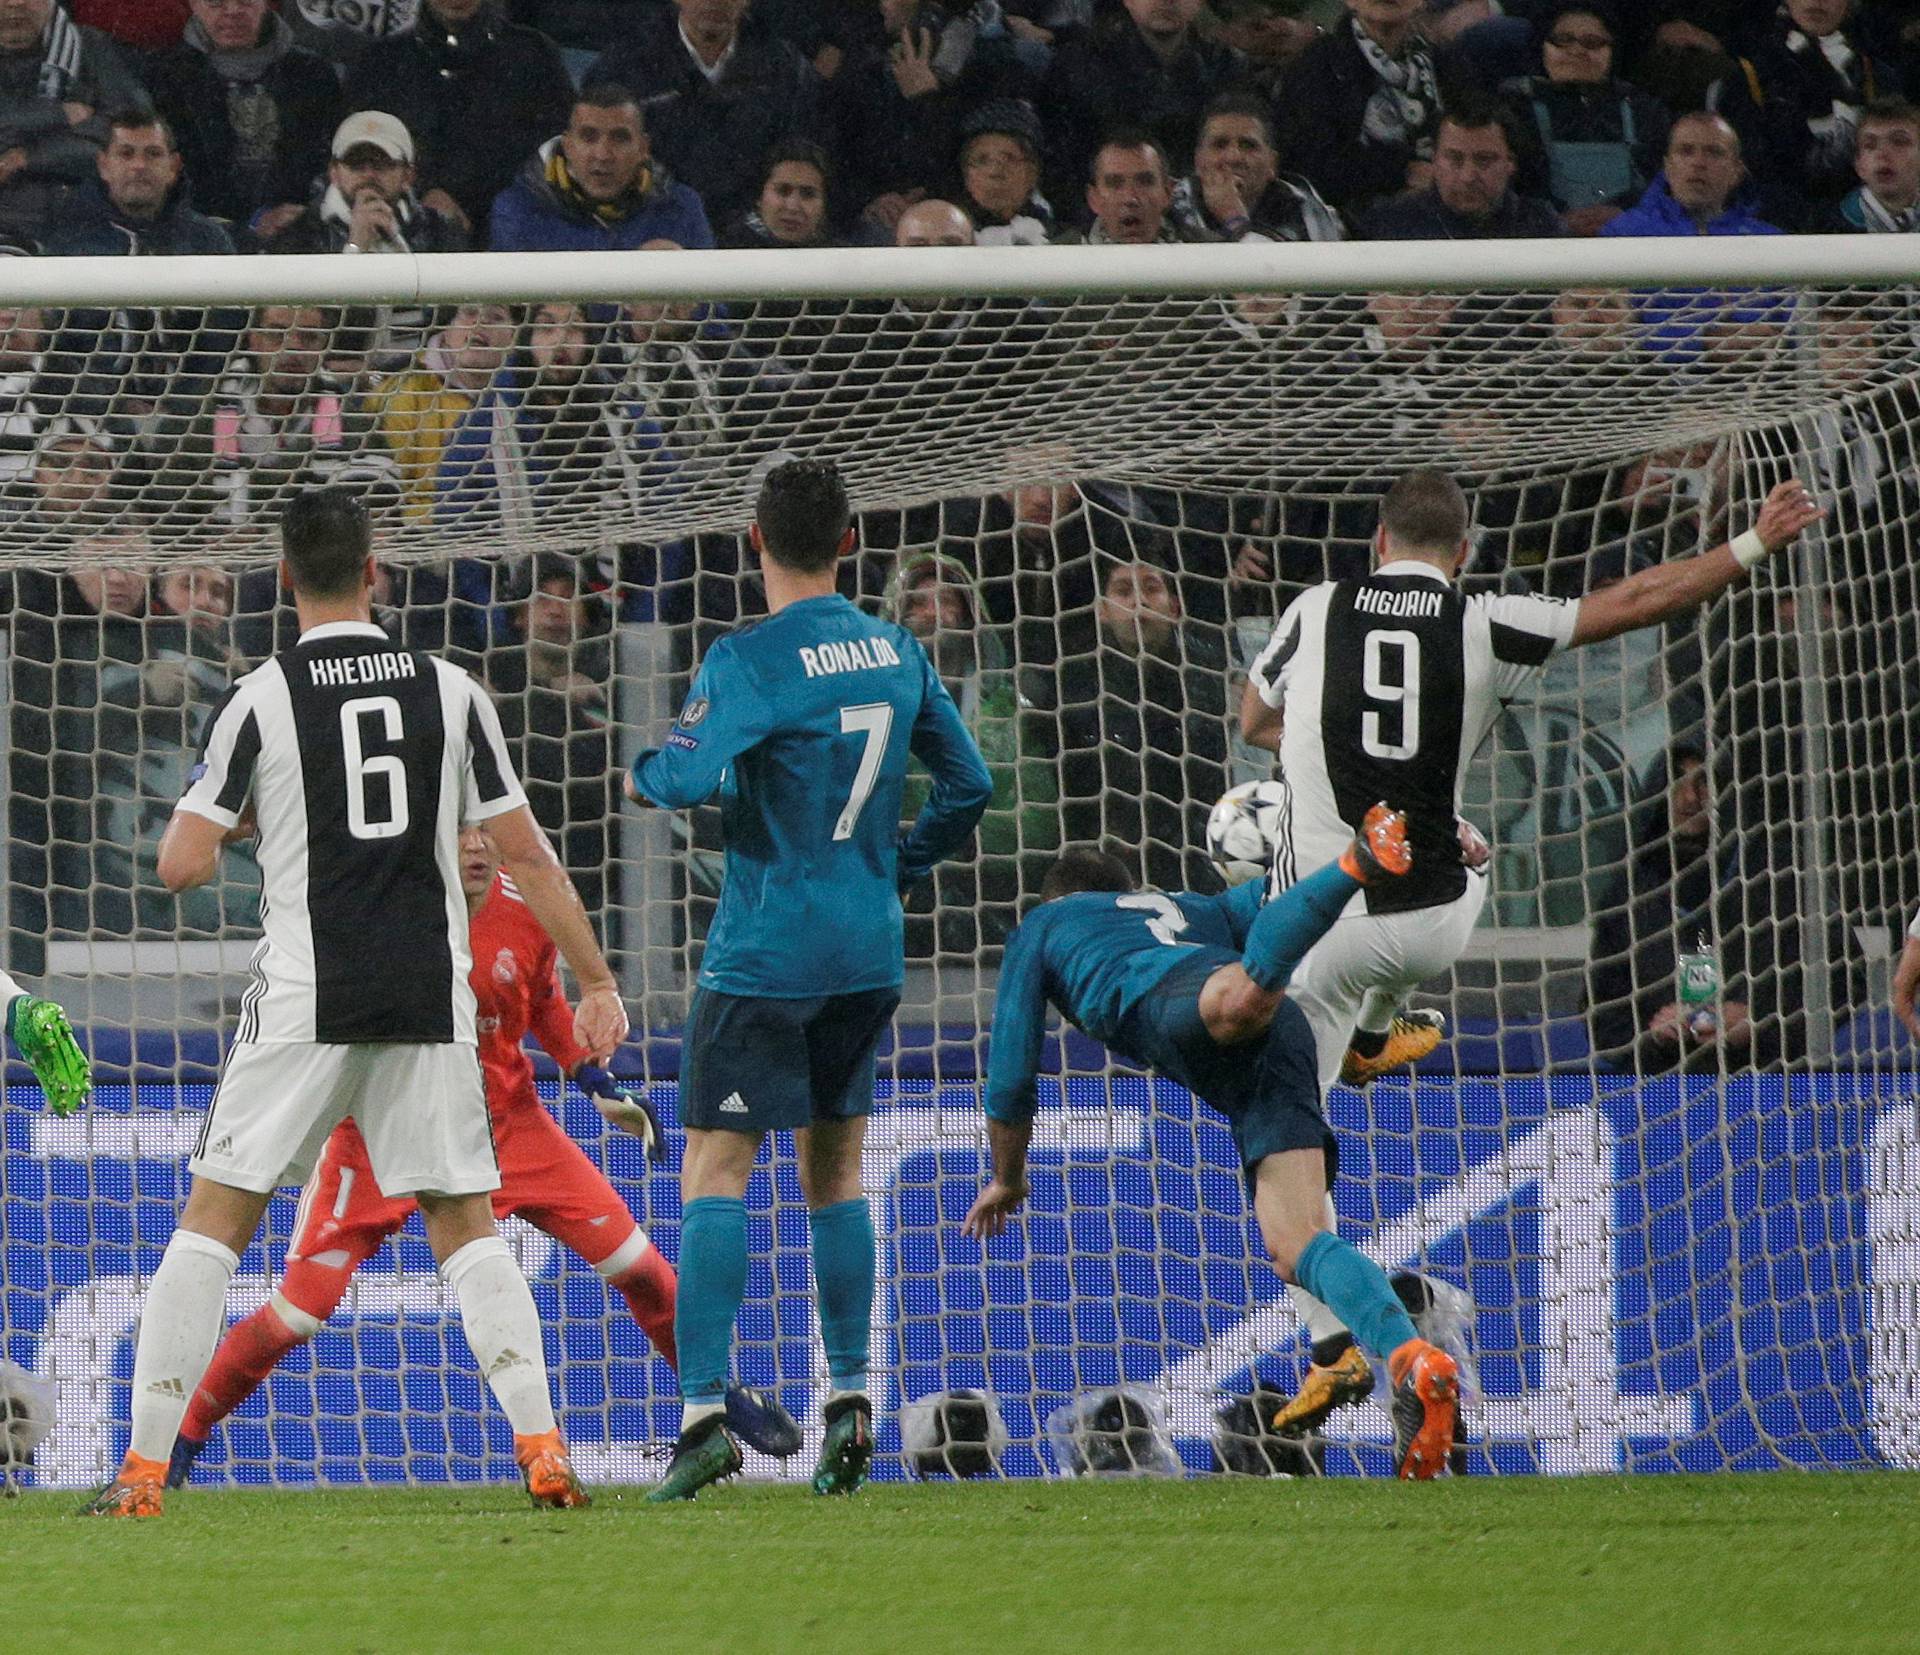 Champions League Quarter Final First Leg - Juventus vs Real Madrid